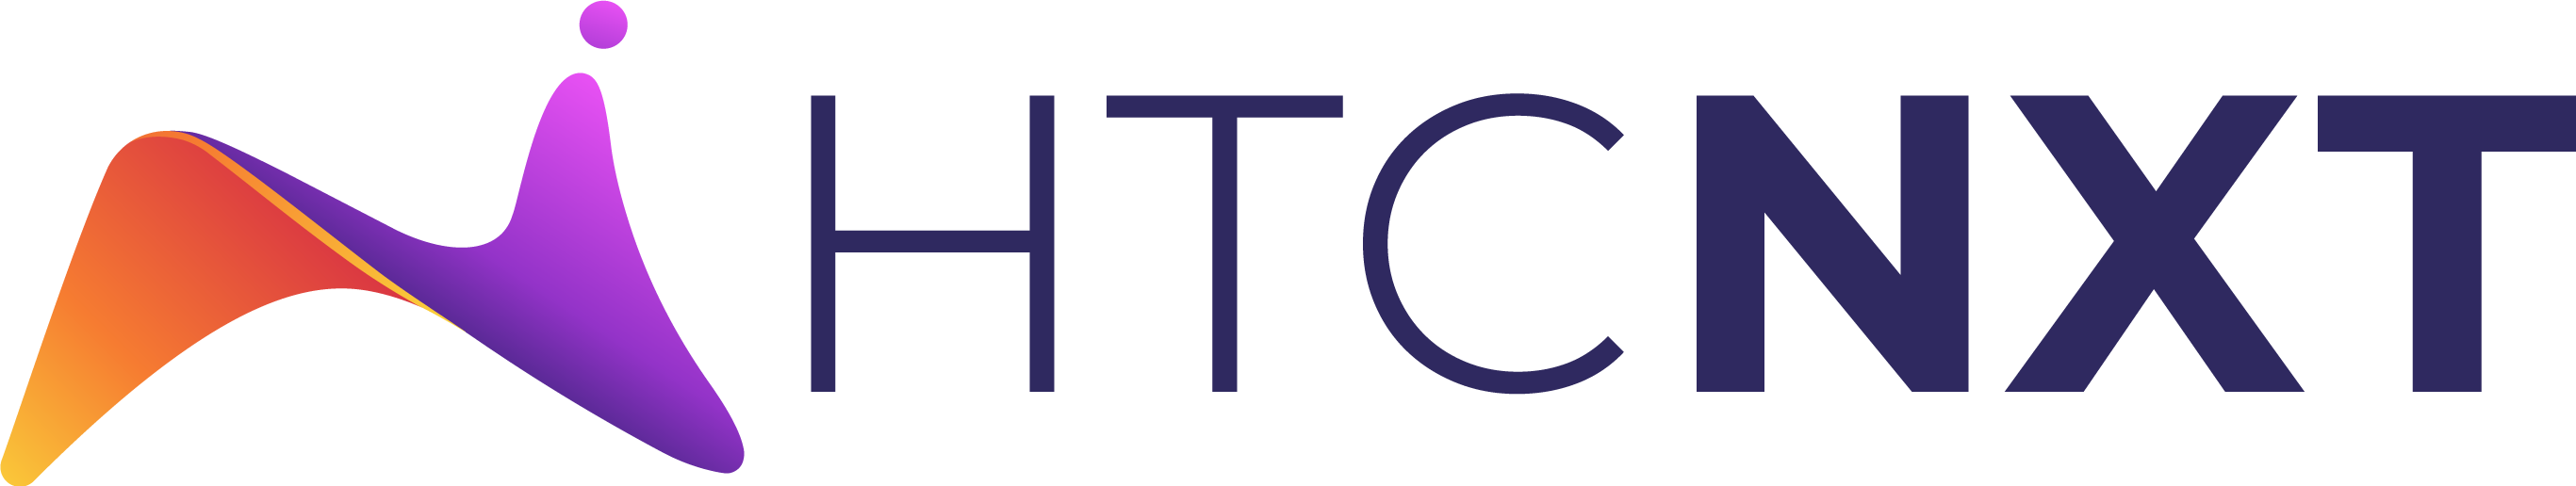 htcnxt-logo-in-navy%2C-purple-and-orange